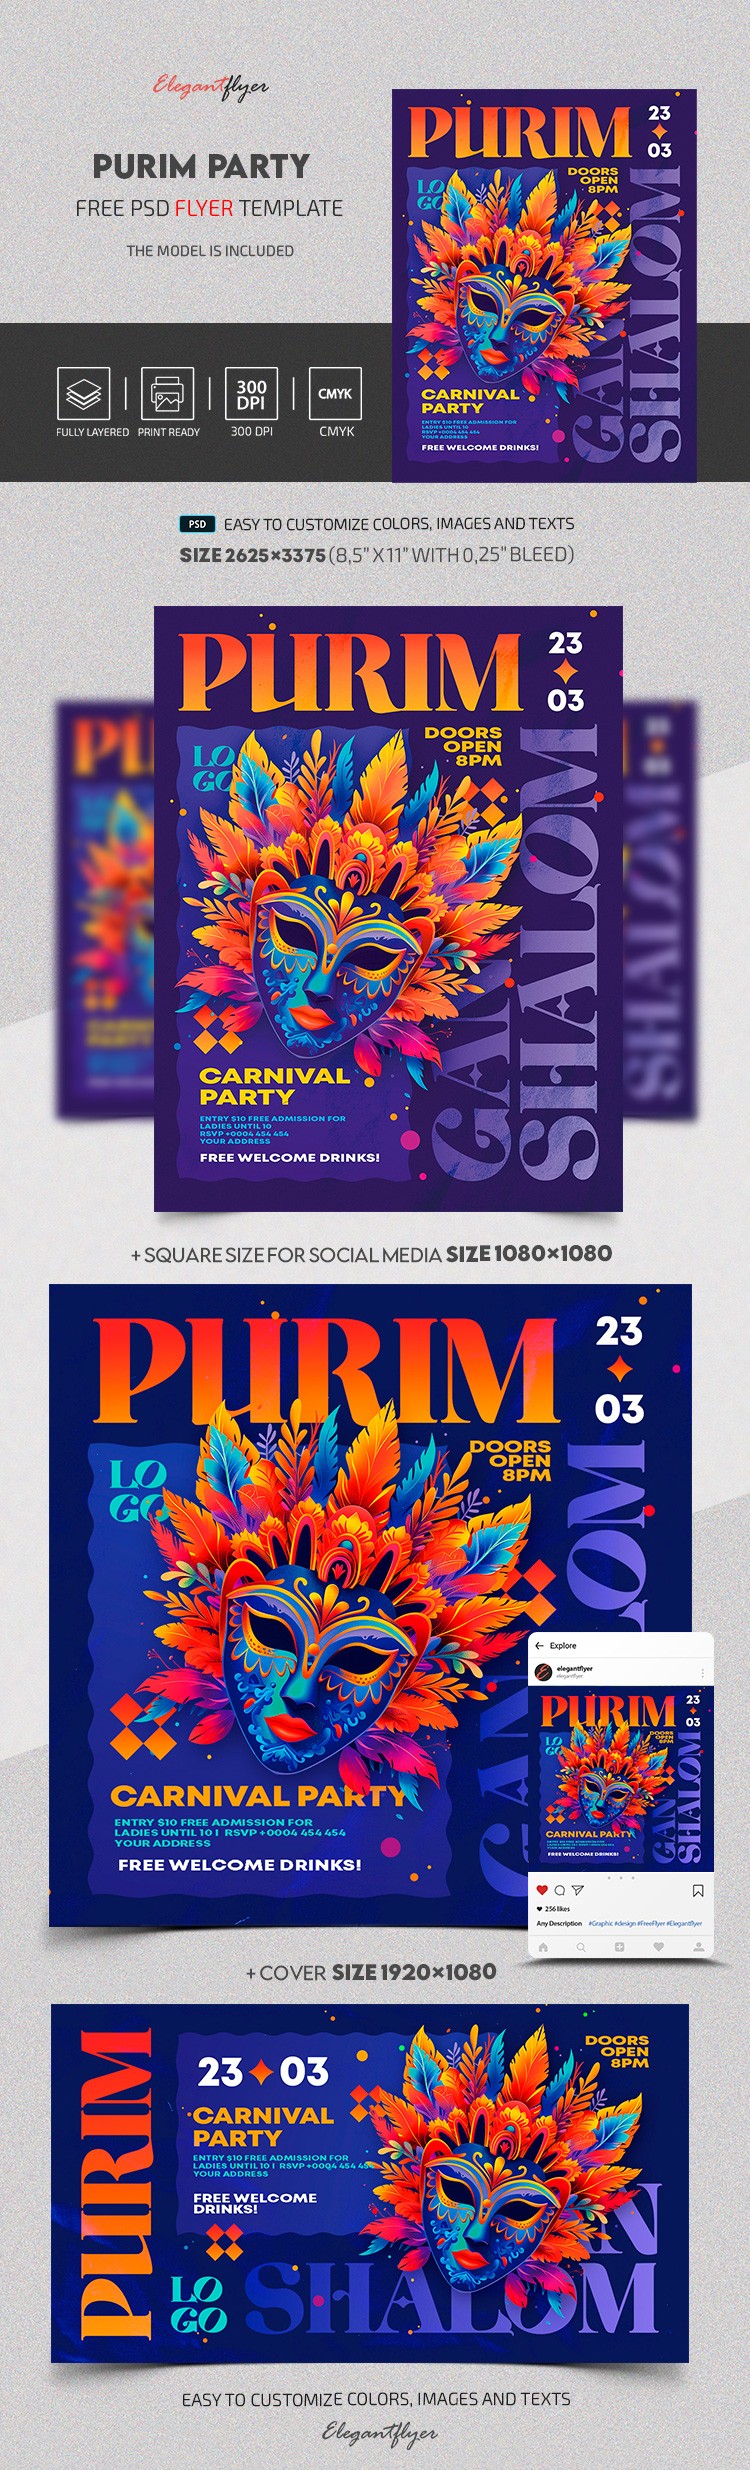 Purim Party by ElegantFlyer